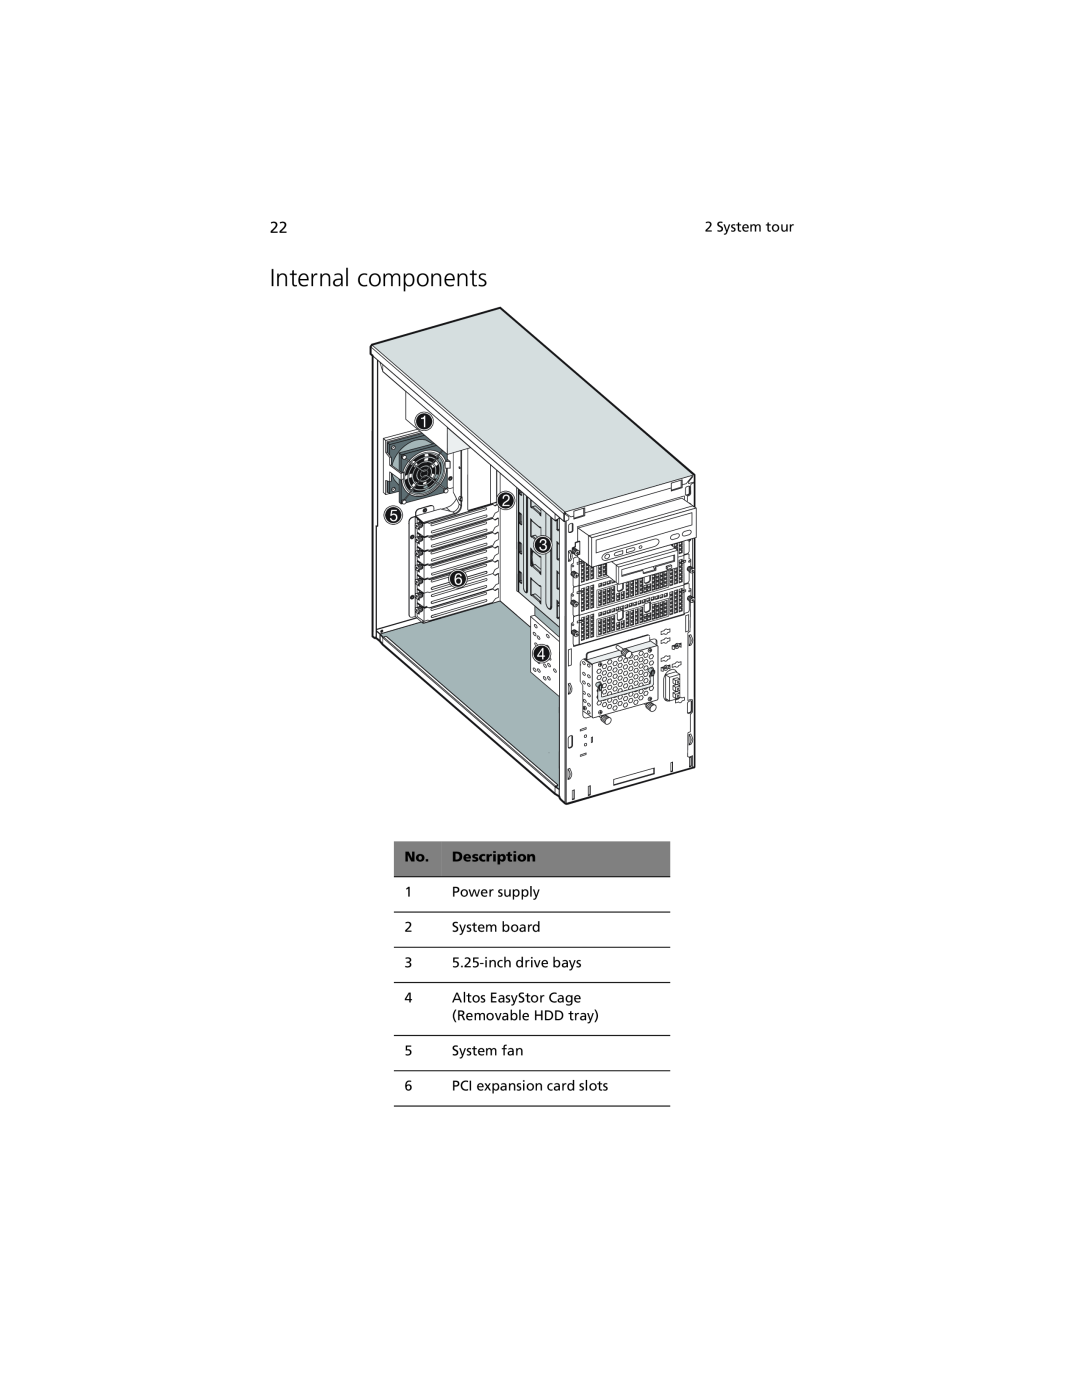 Acer G301 manual Internal components, No. Description 